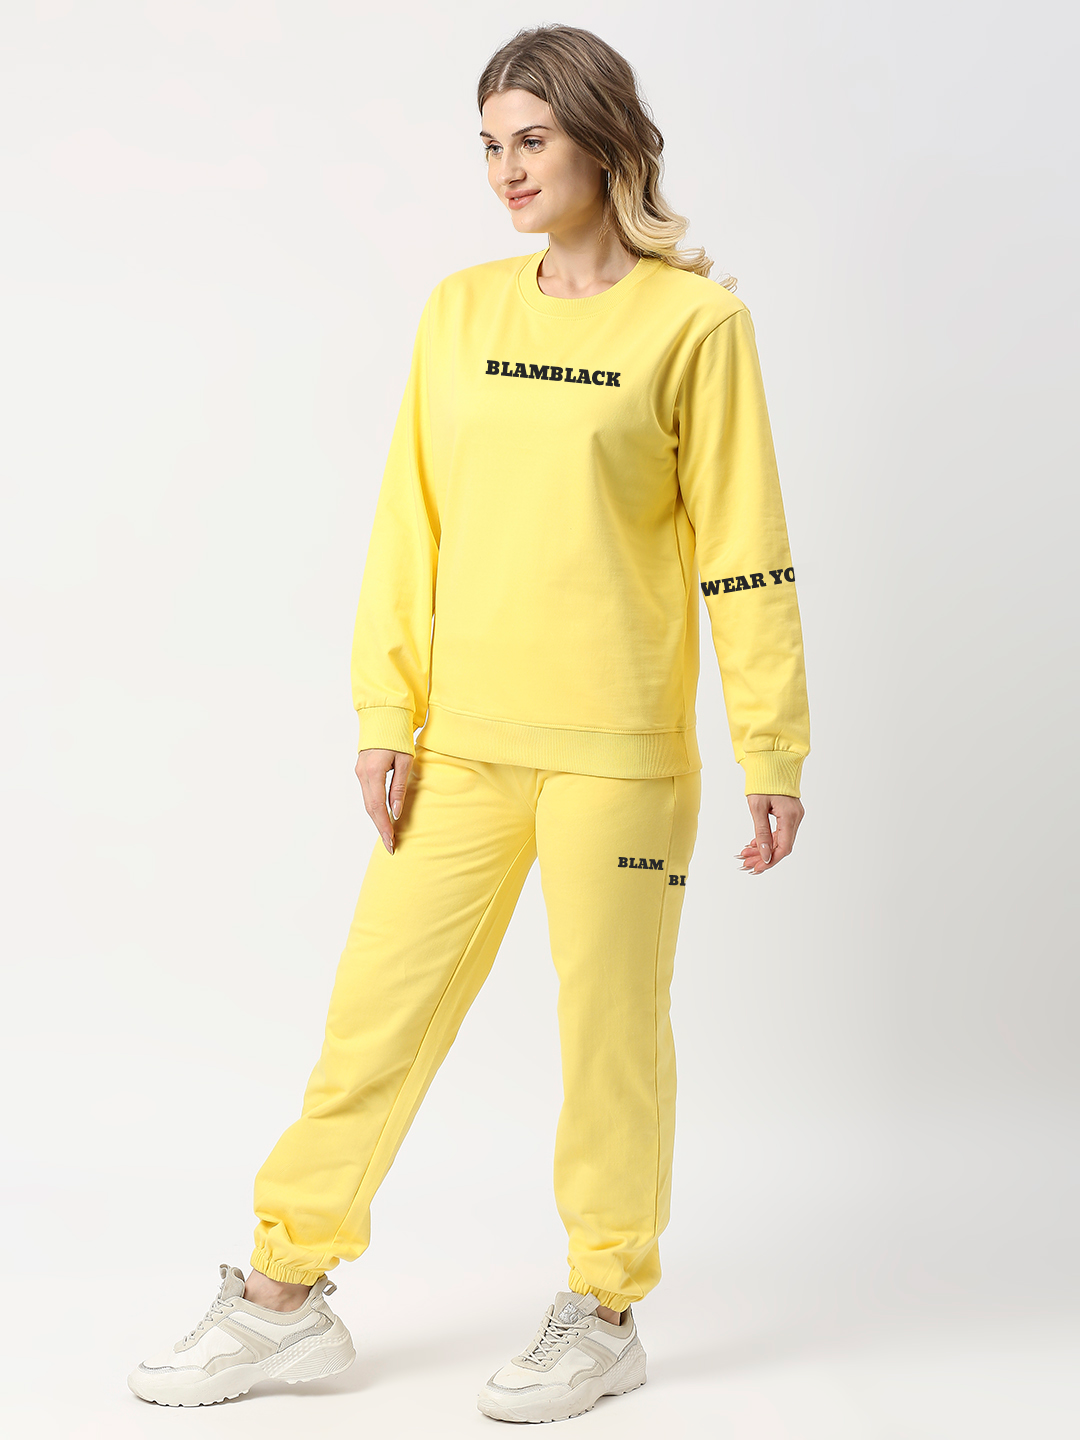 Shop Blamblack Lemon Yellow Sweatshirt and Joggers Co-ord Set Online –  BlamBlack